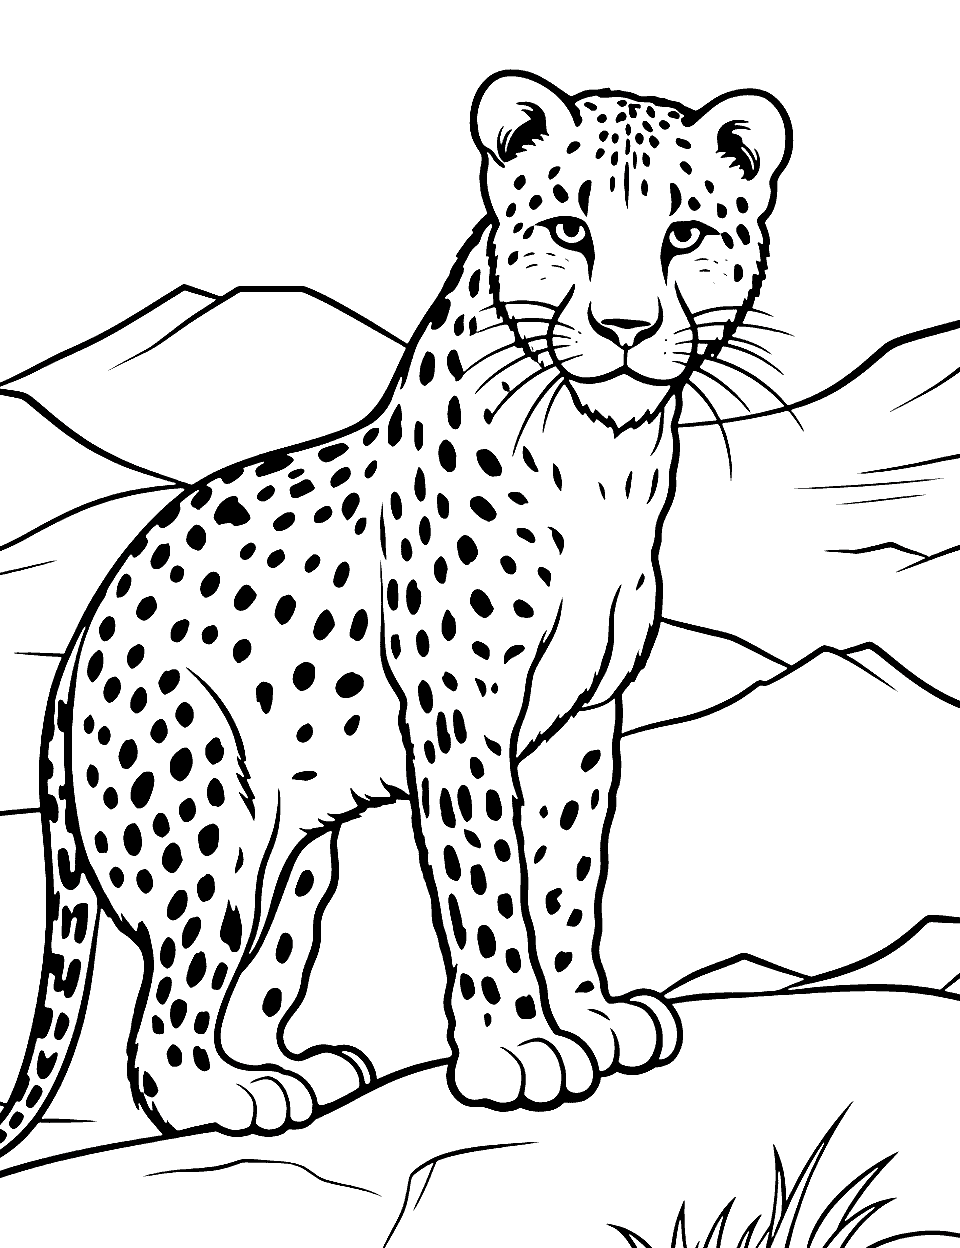 Cheetah in a Mountainous Landscape Coloring Page - A scene of a cheetah in a mountainous terrain.